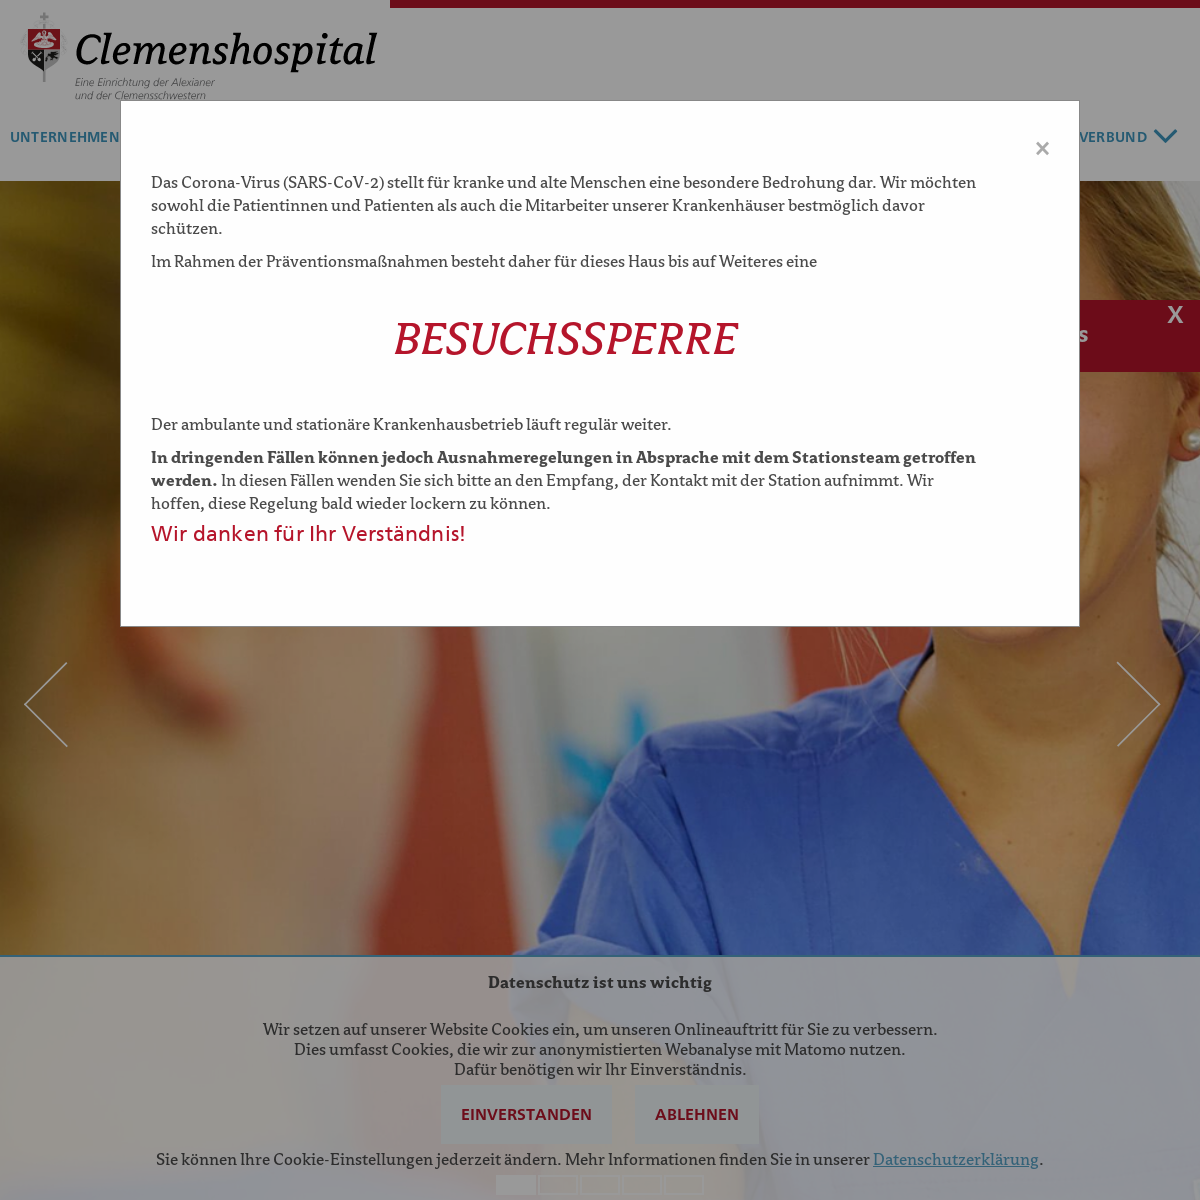 A complete backup of clemenshospital.de